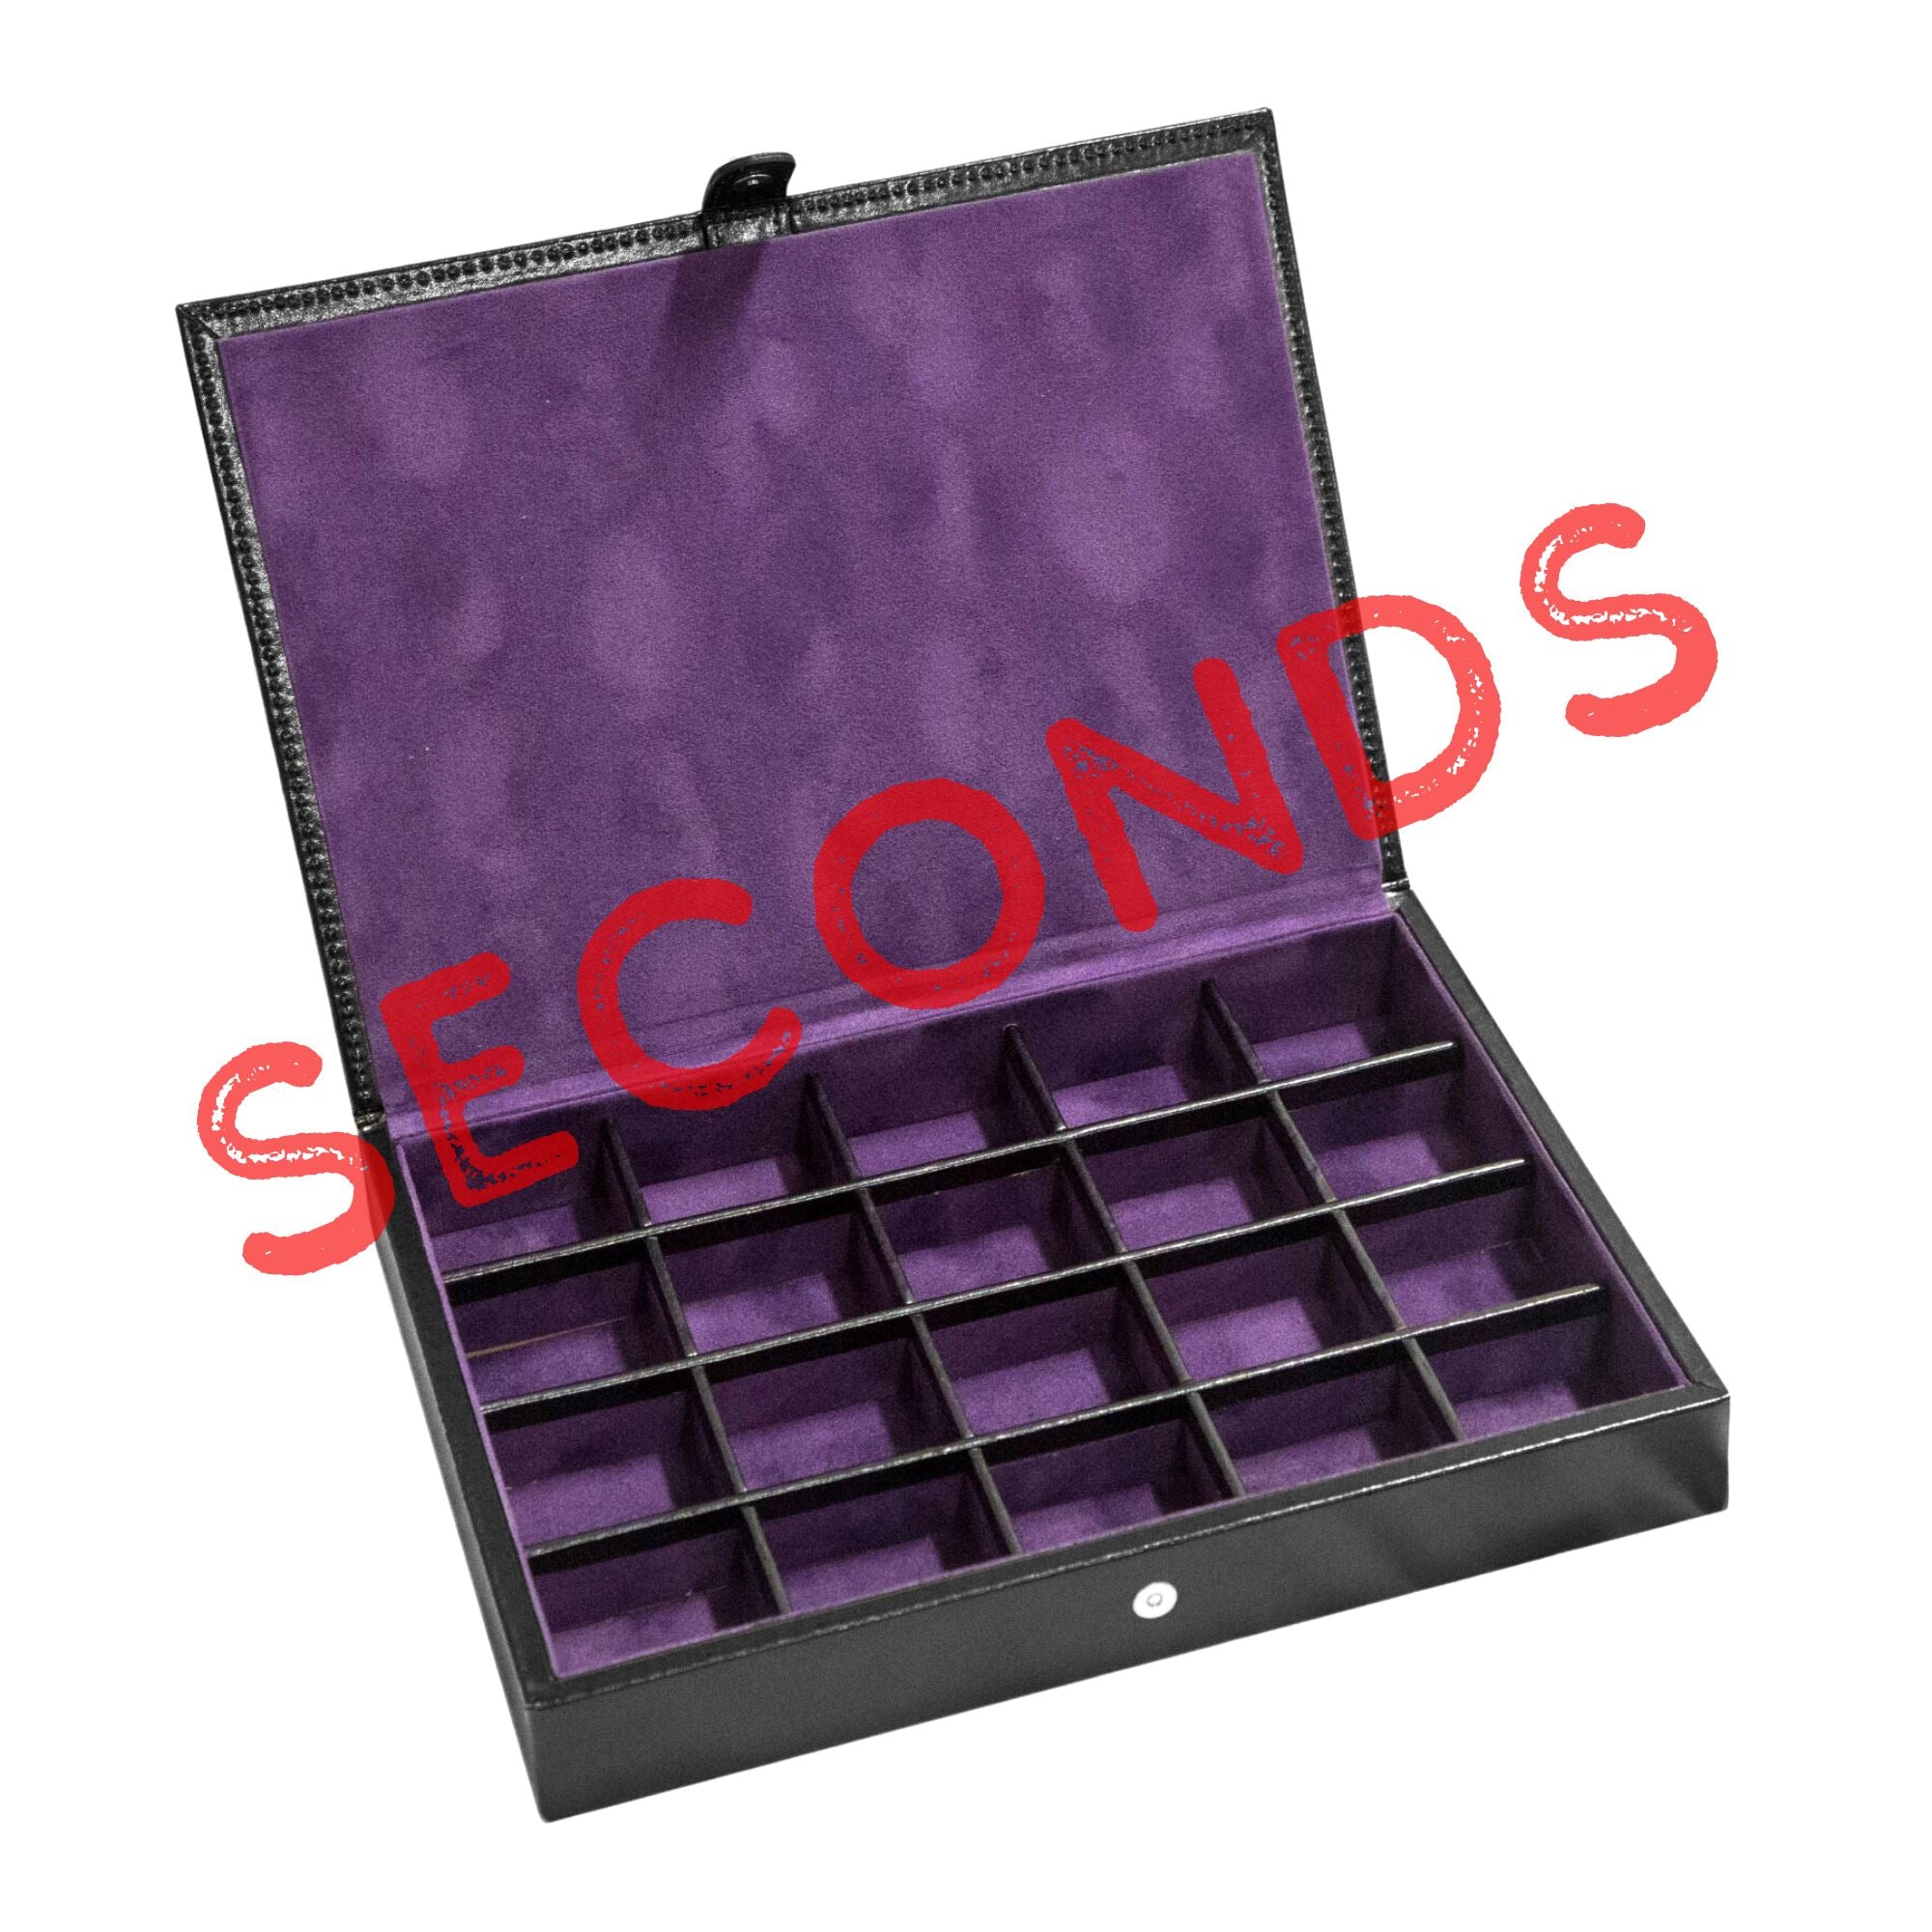 Seconds - 20 pair Bonded Leather Black/Purple Cufflink Storage Box Seconds Clinks Australia 